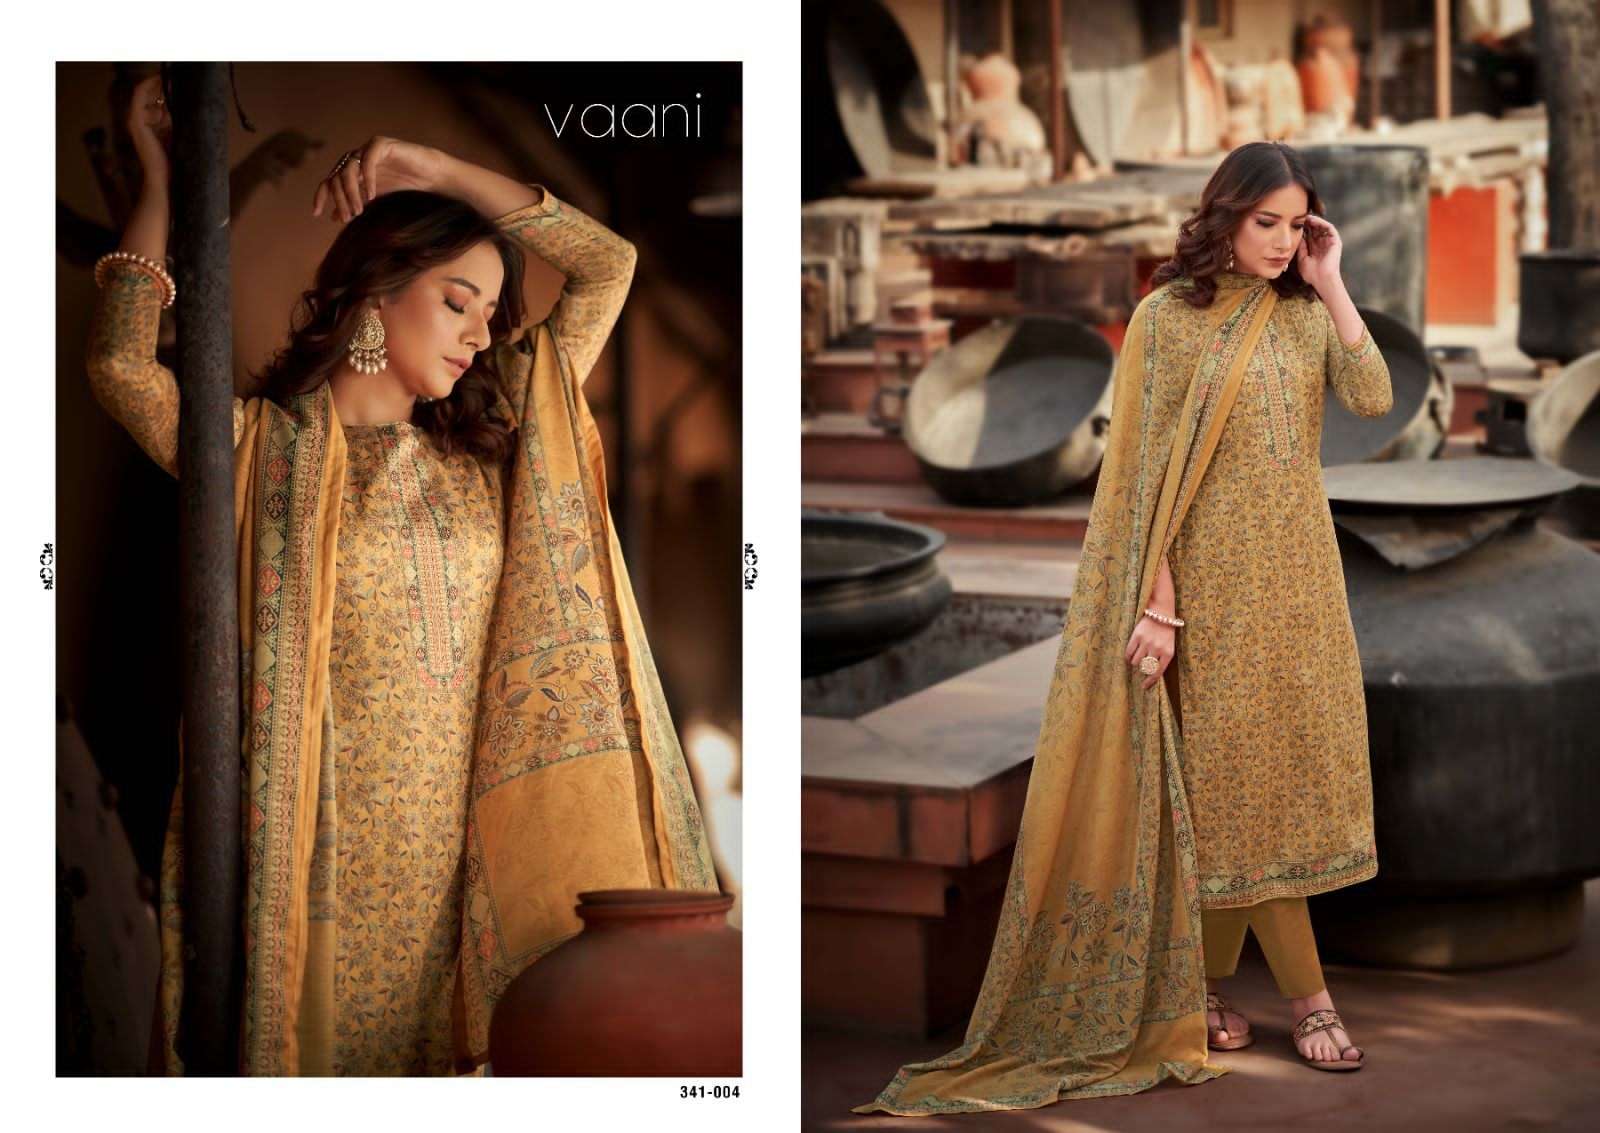 sargam vaani 341-001-006 series designer wedding wear pakistani salwar kameez wholesaler surat